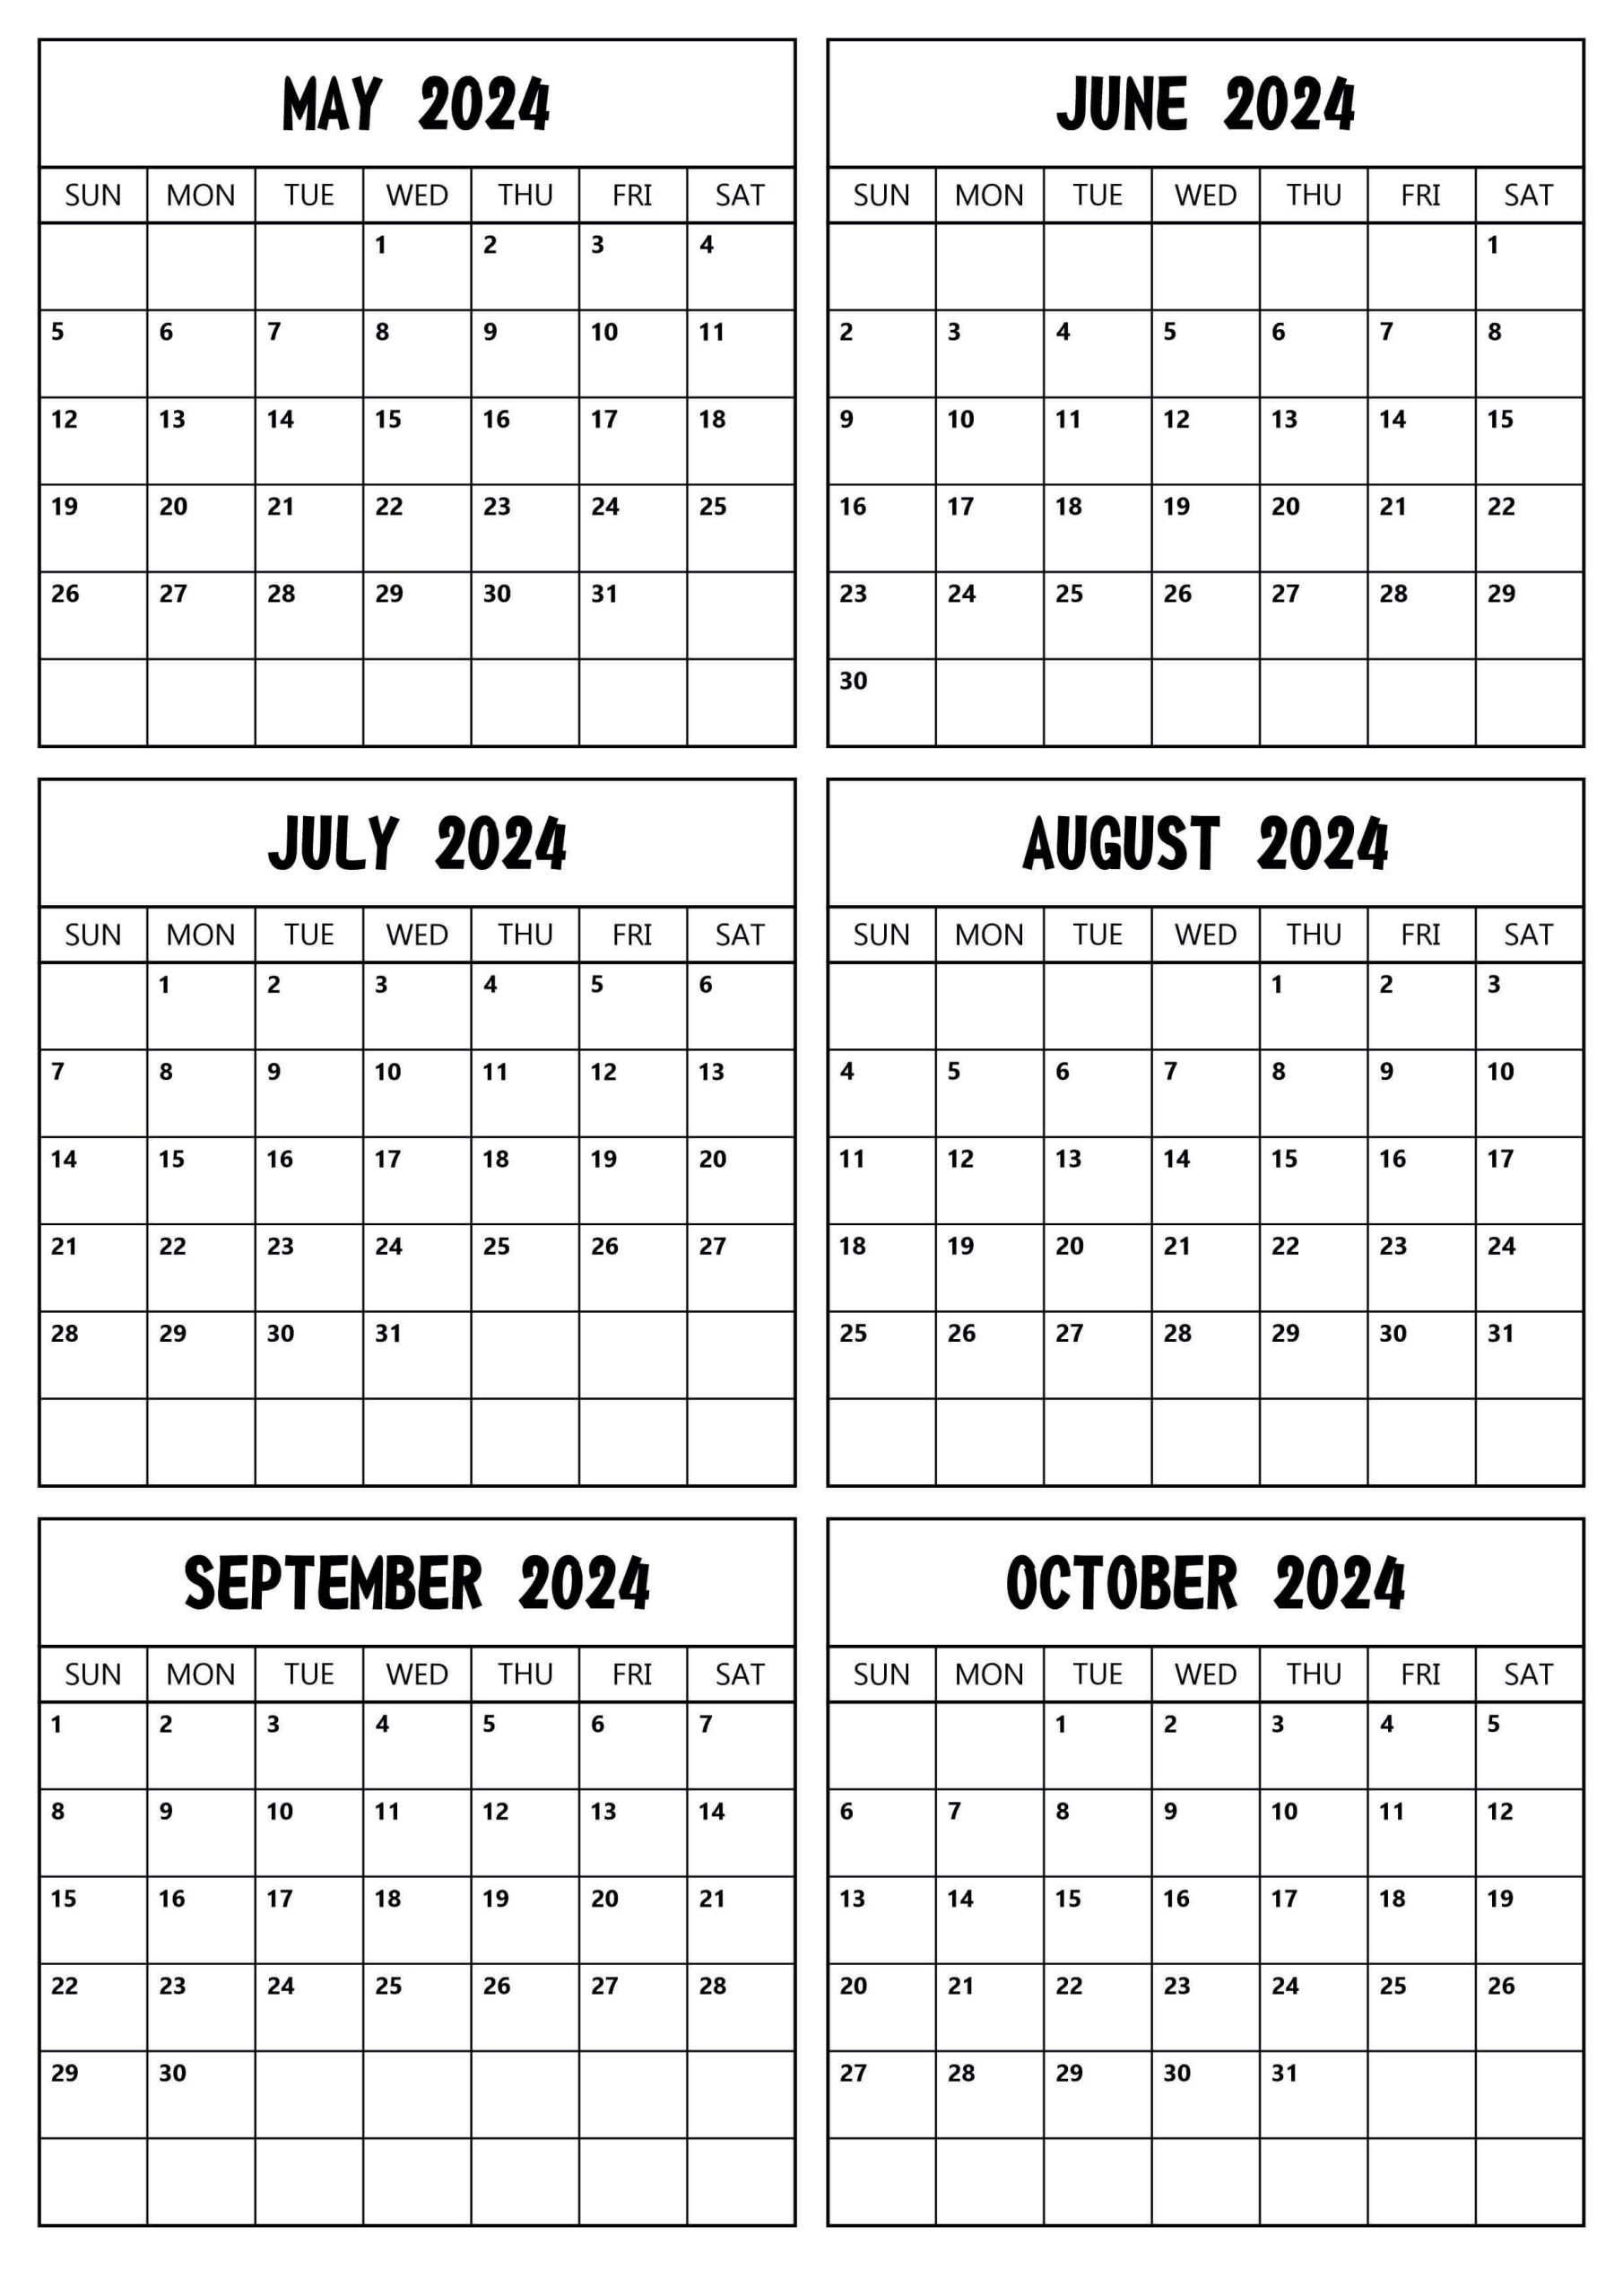 2024 May to October Calendar